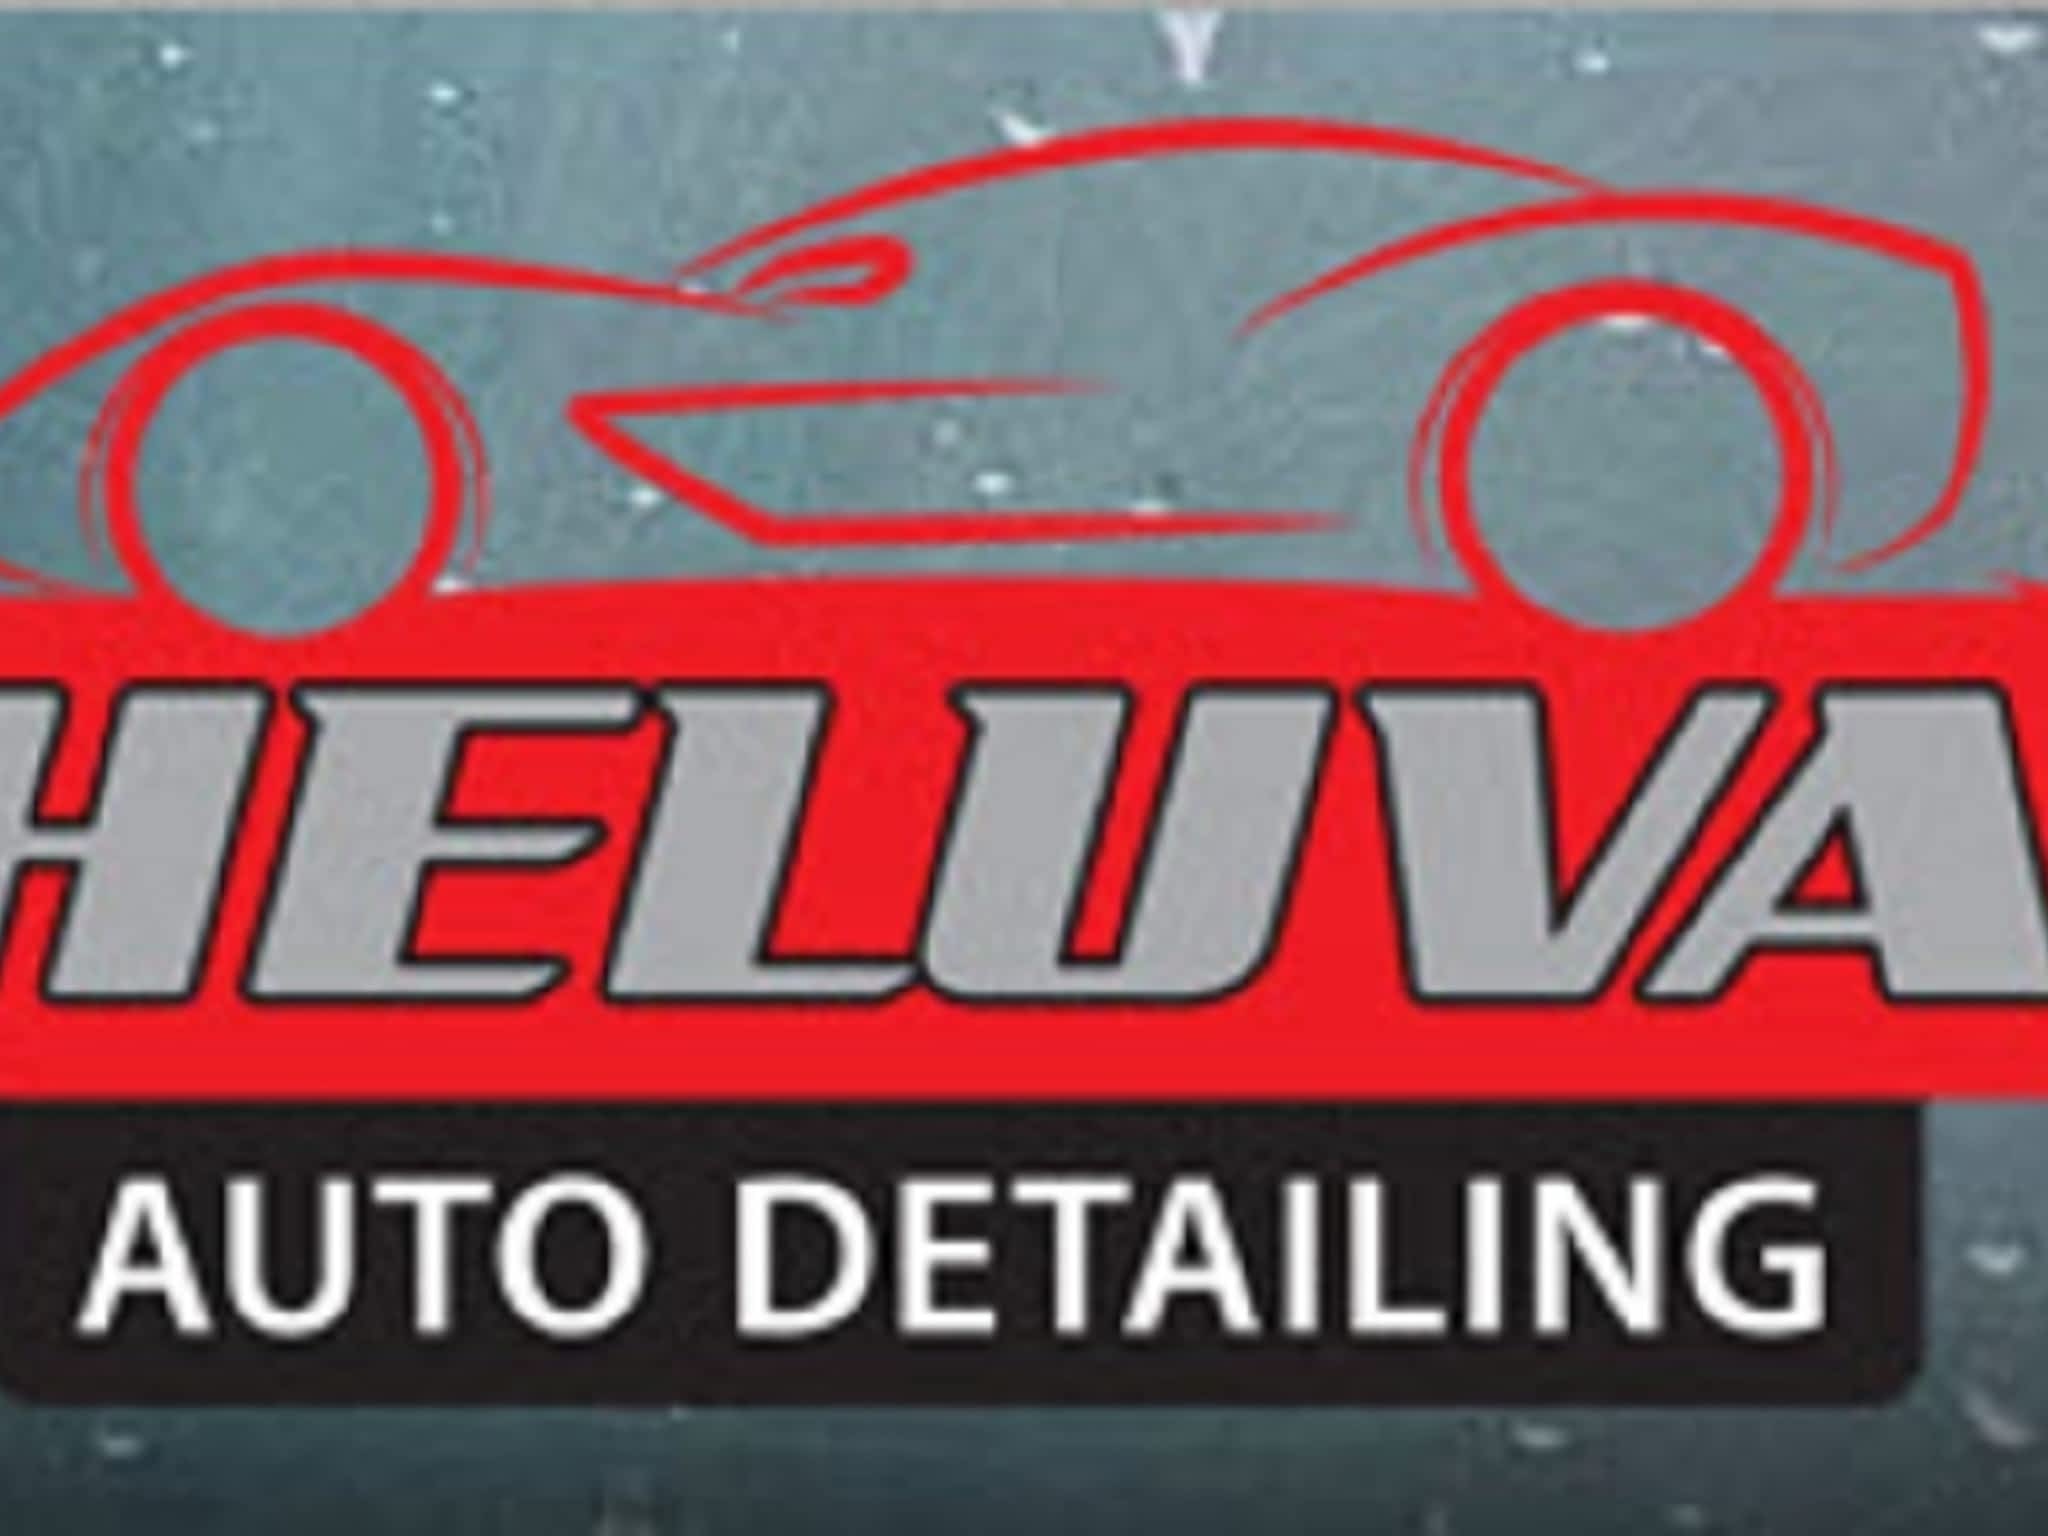 photo Heluva Auto Detailing Ltd